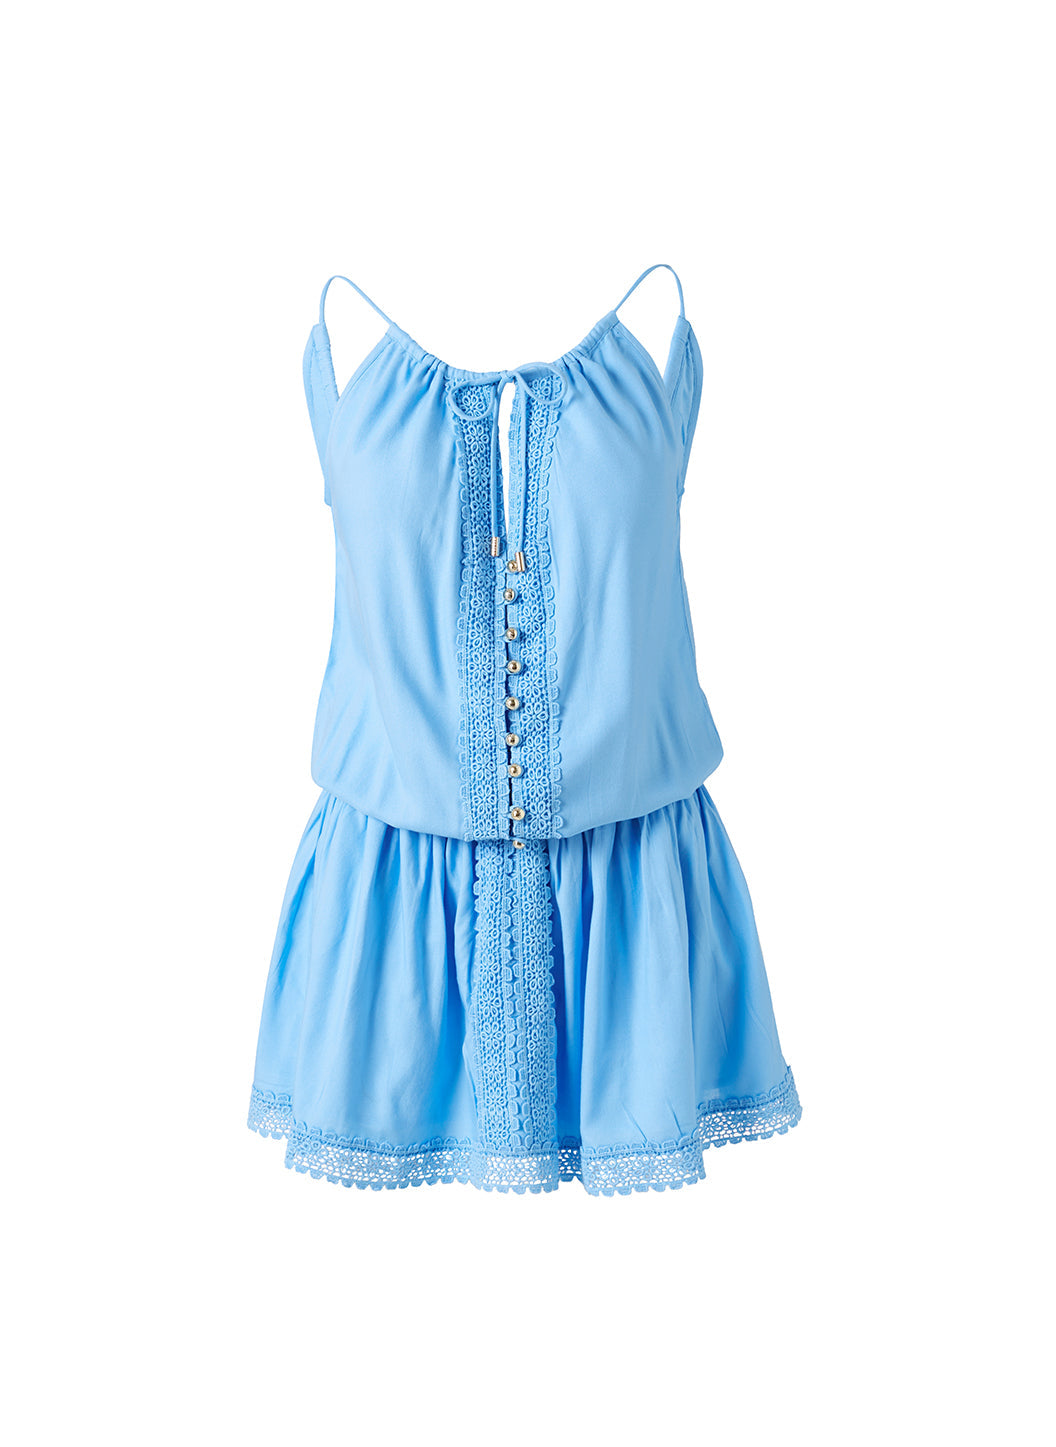 chelsea-blue-dress_cutout